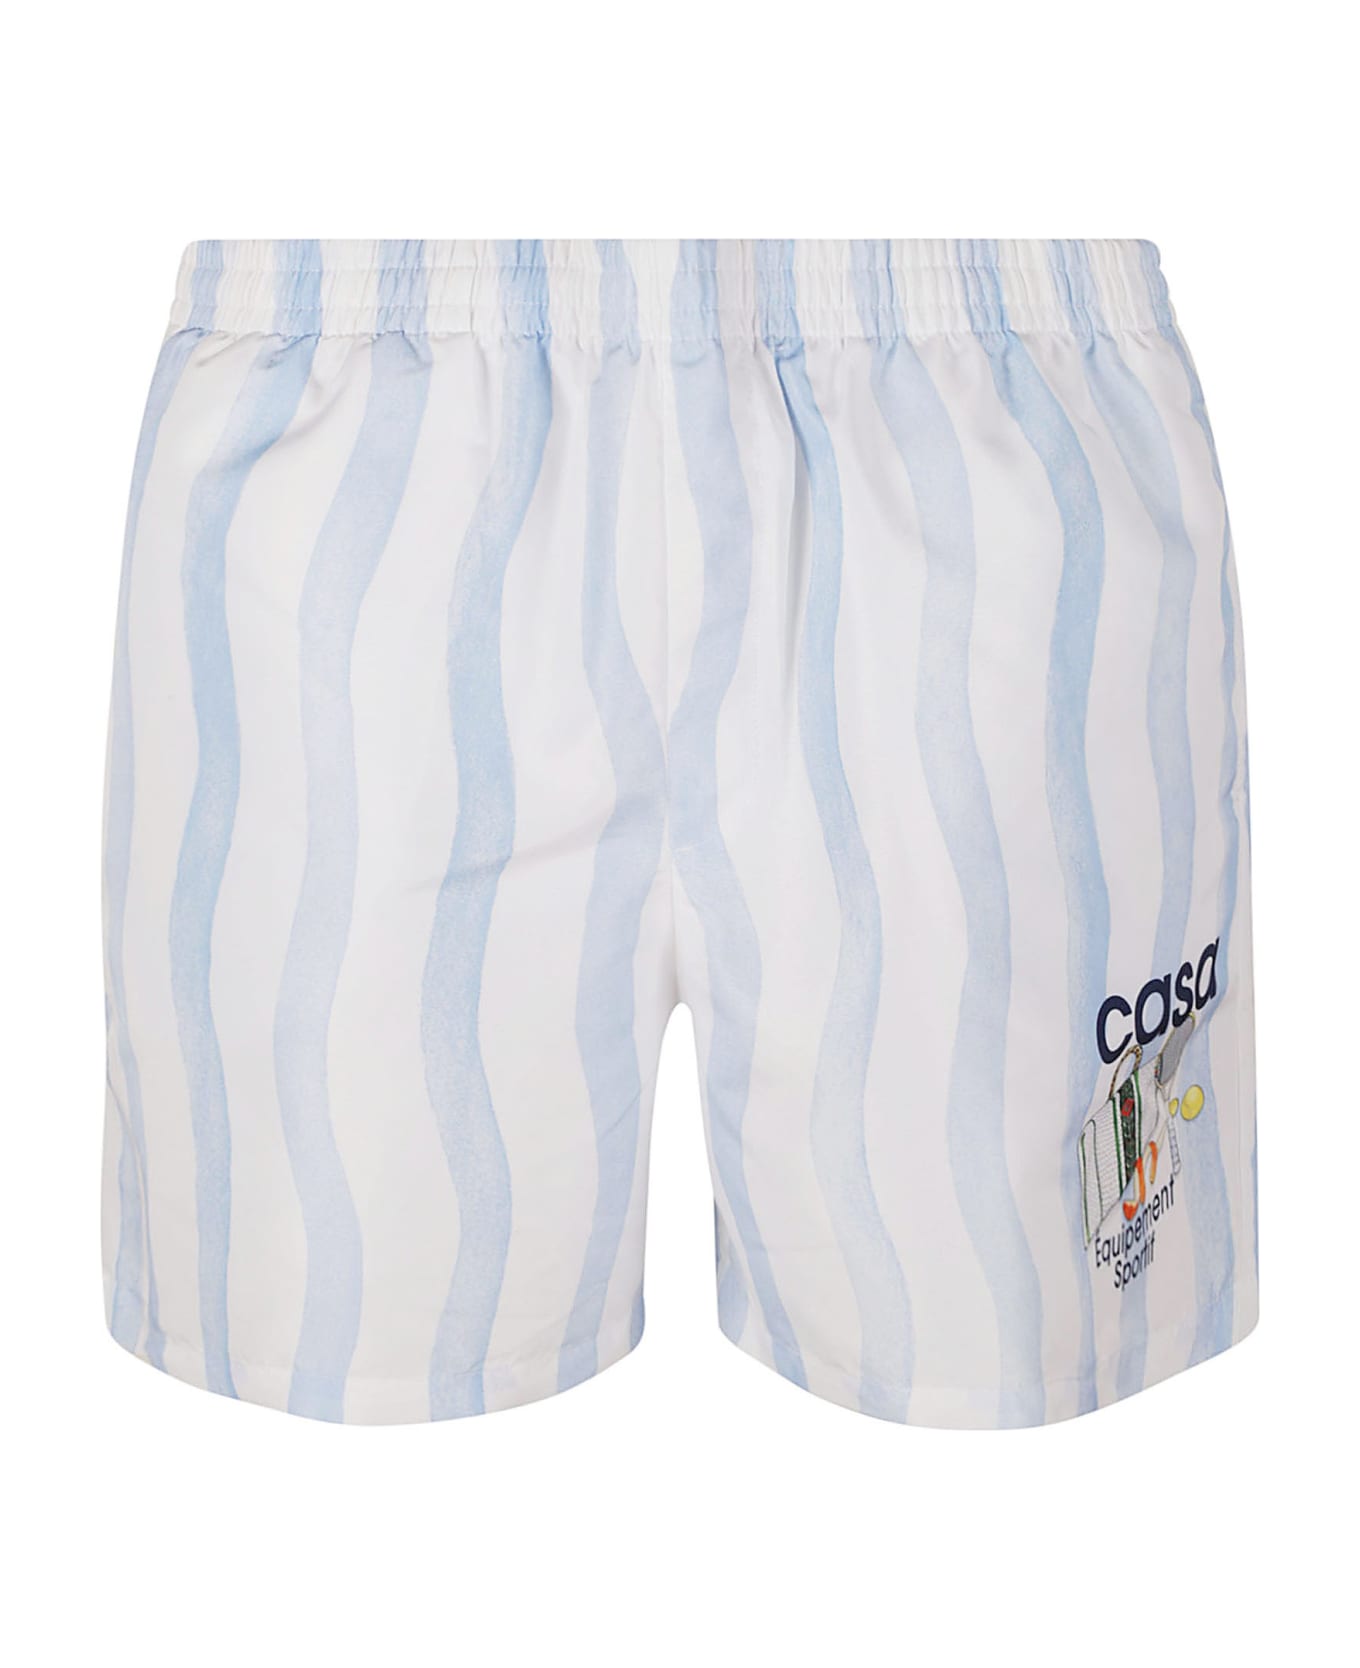 Casablanca Mens Printed Swimshorts - Blue Wave Stripe